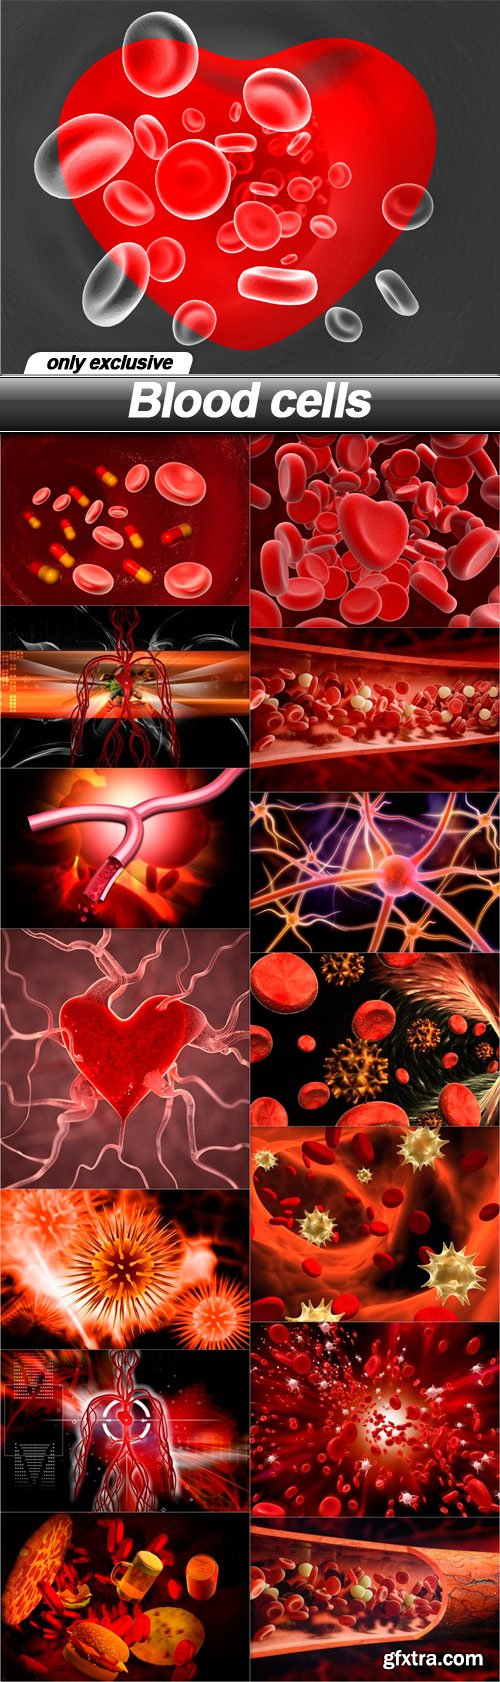 Blood cells - 15 UHQ JPEG